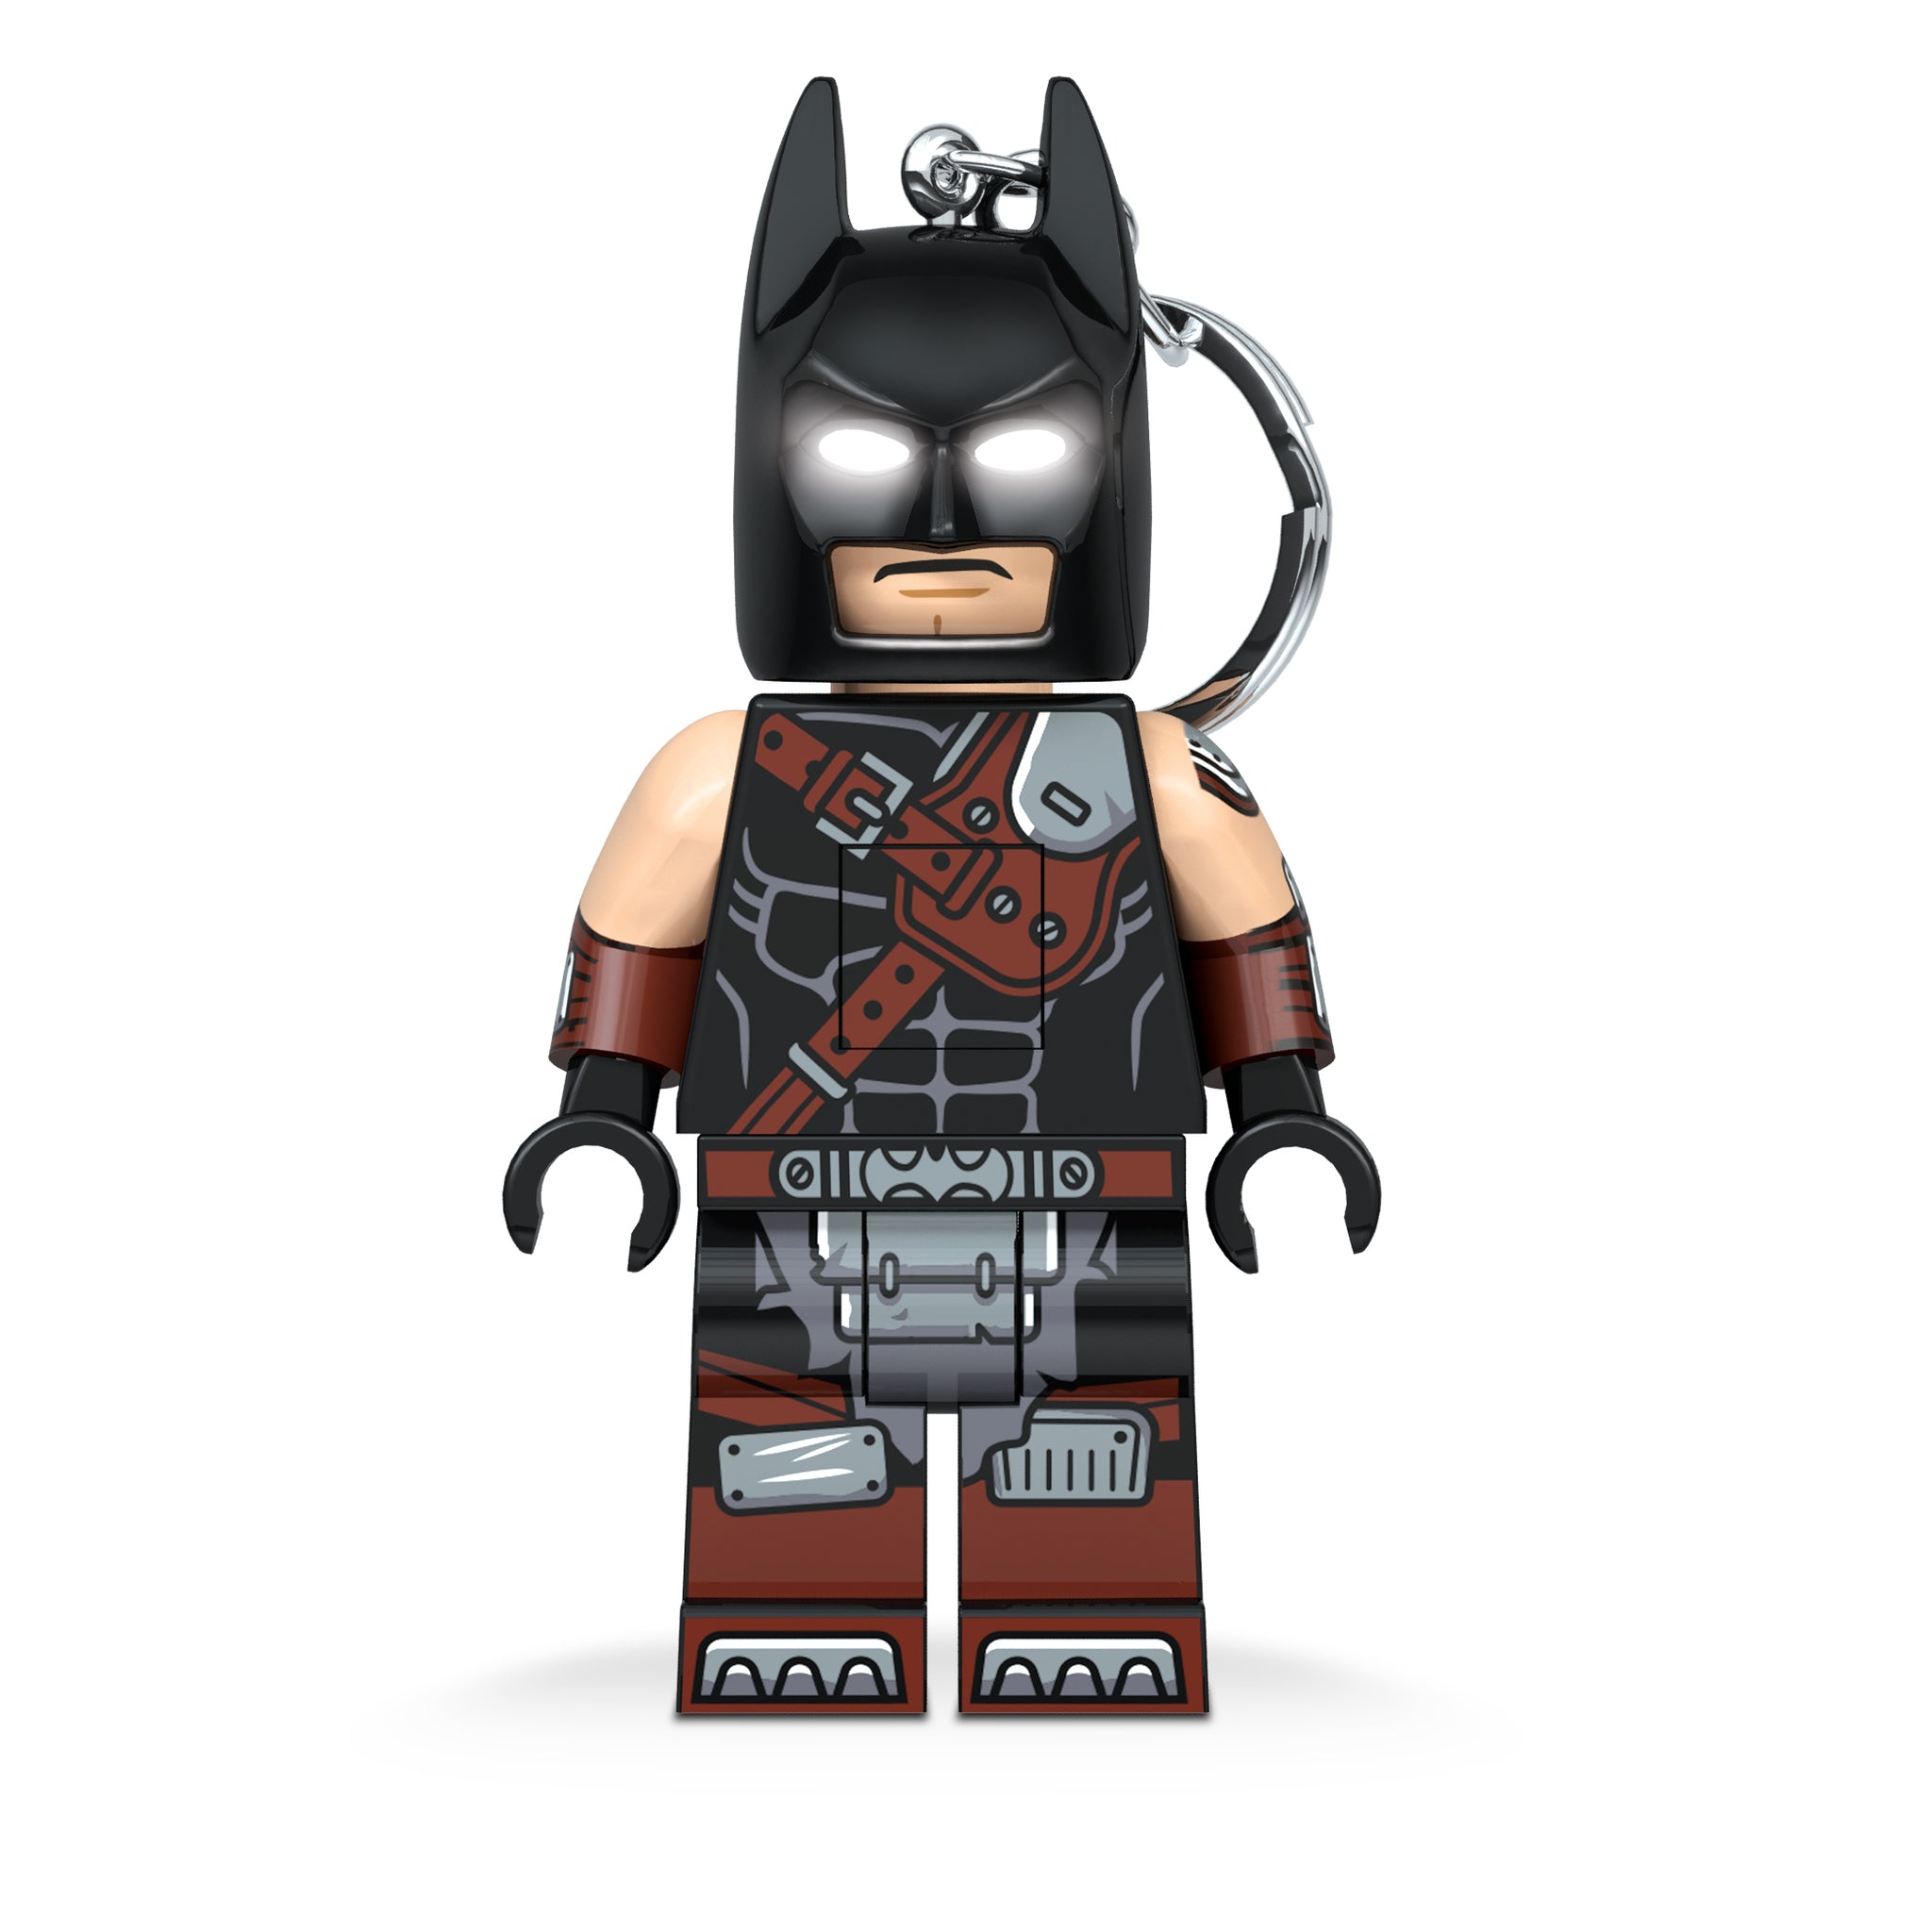 LEGO Batman Set Revealed for The LEGO Movie 2 Line - The Batman